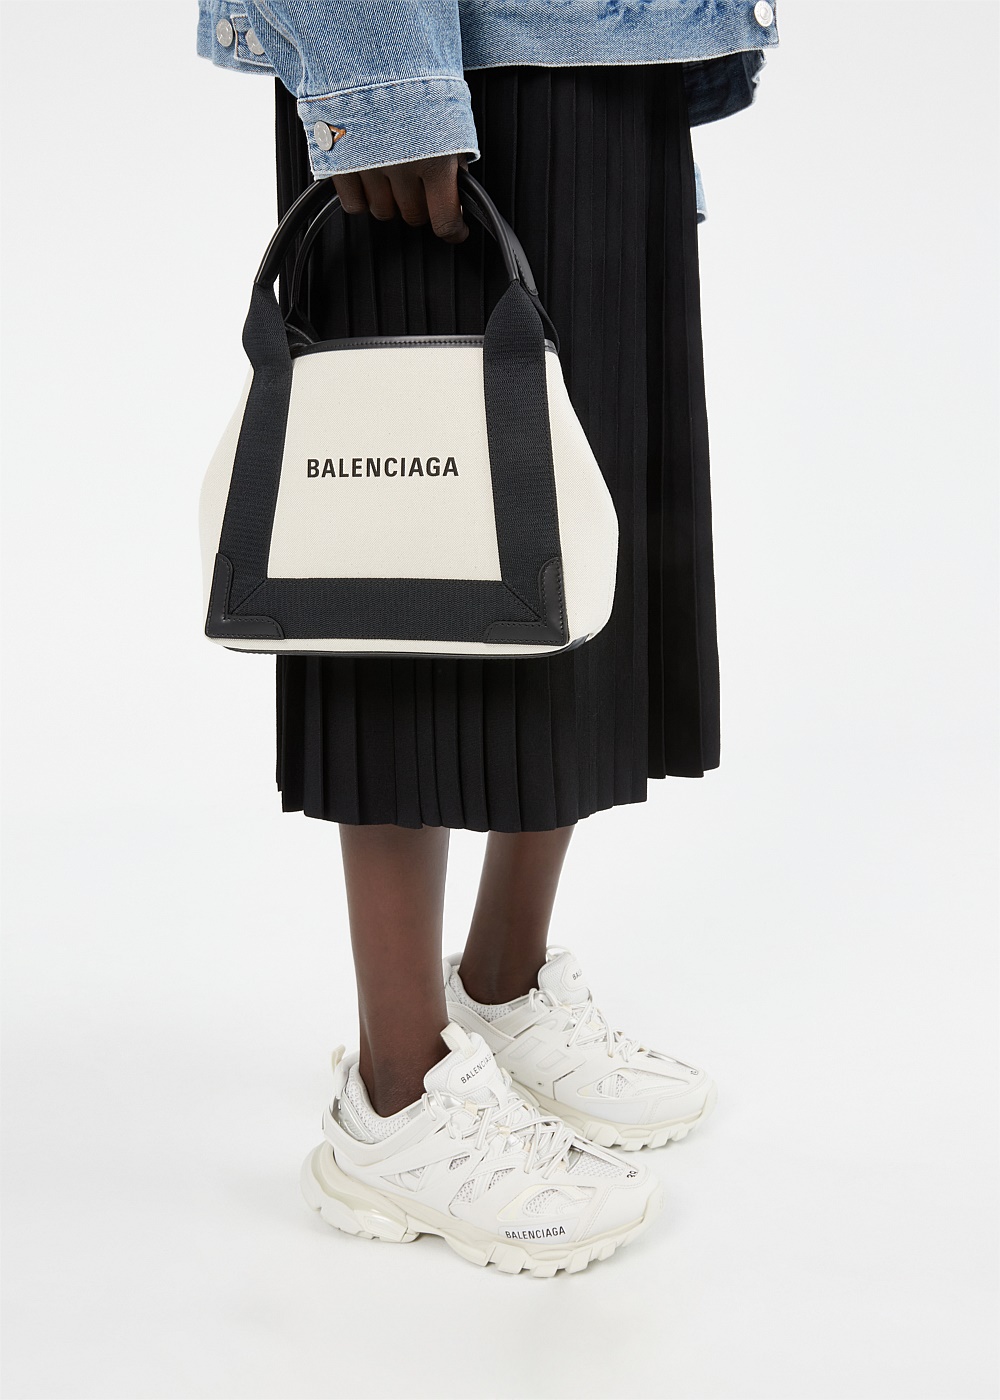 Balenciaga XS Everyday Tote Bag  Harrods GR